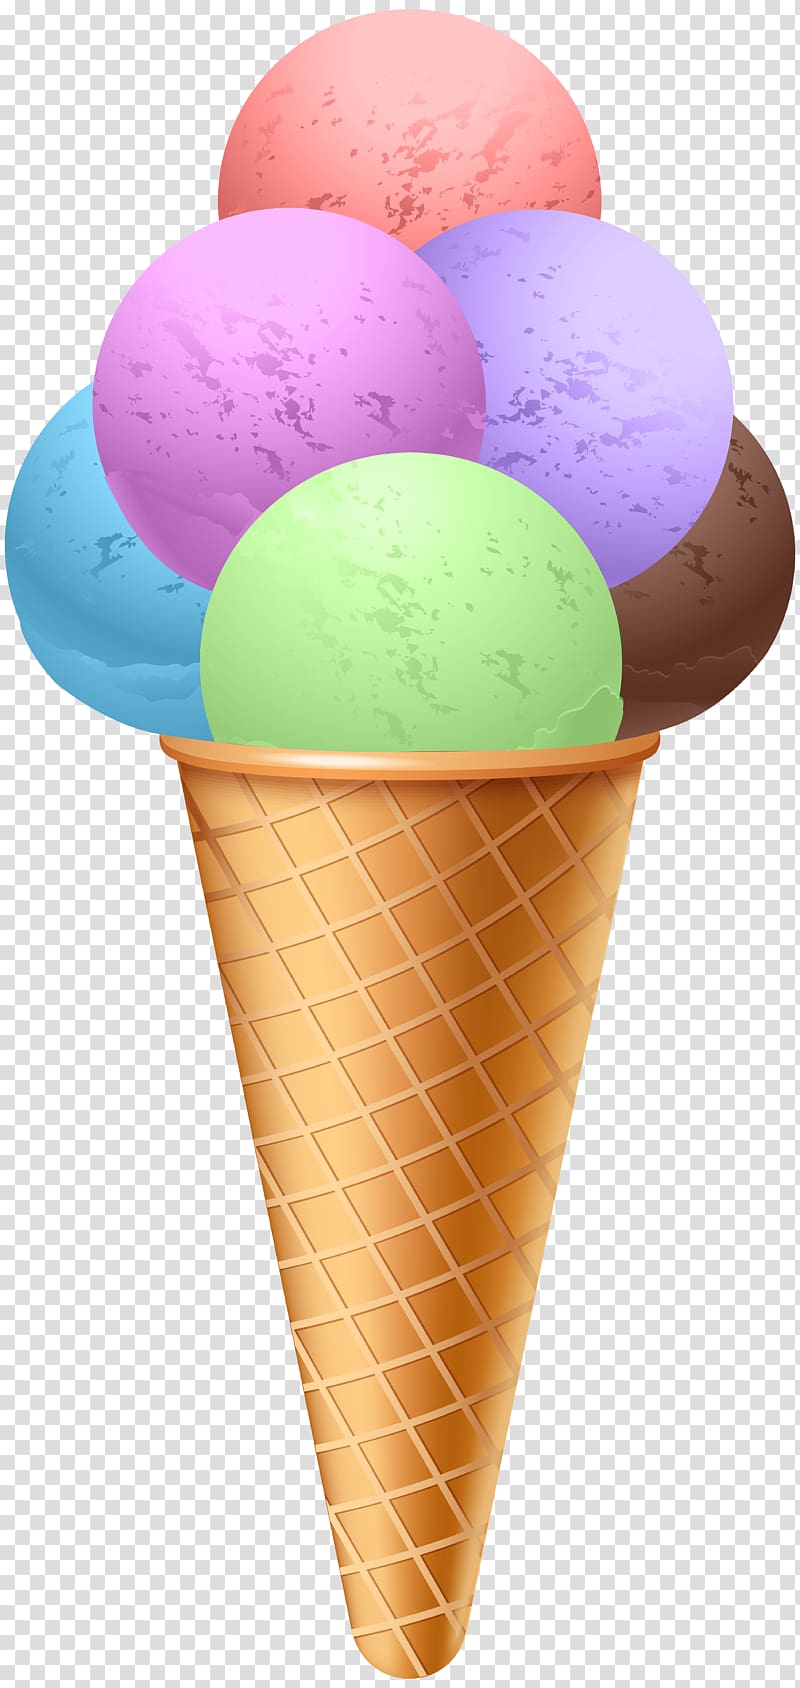 Ice cream cone Gelato Waffle, Big Ice Cream Cone transparent background PNG clipart